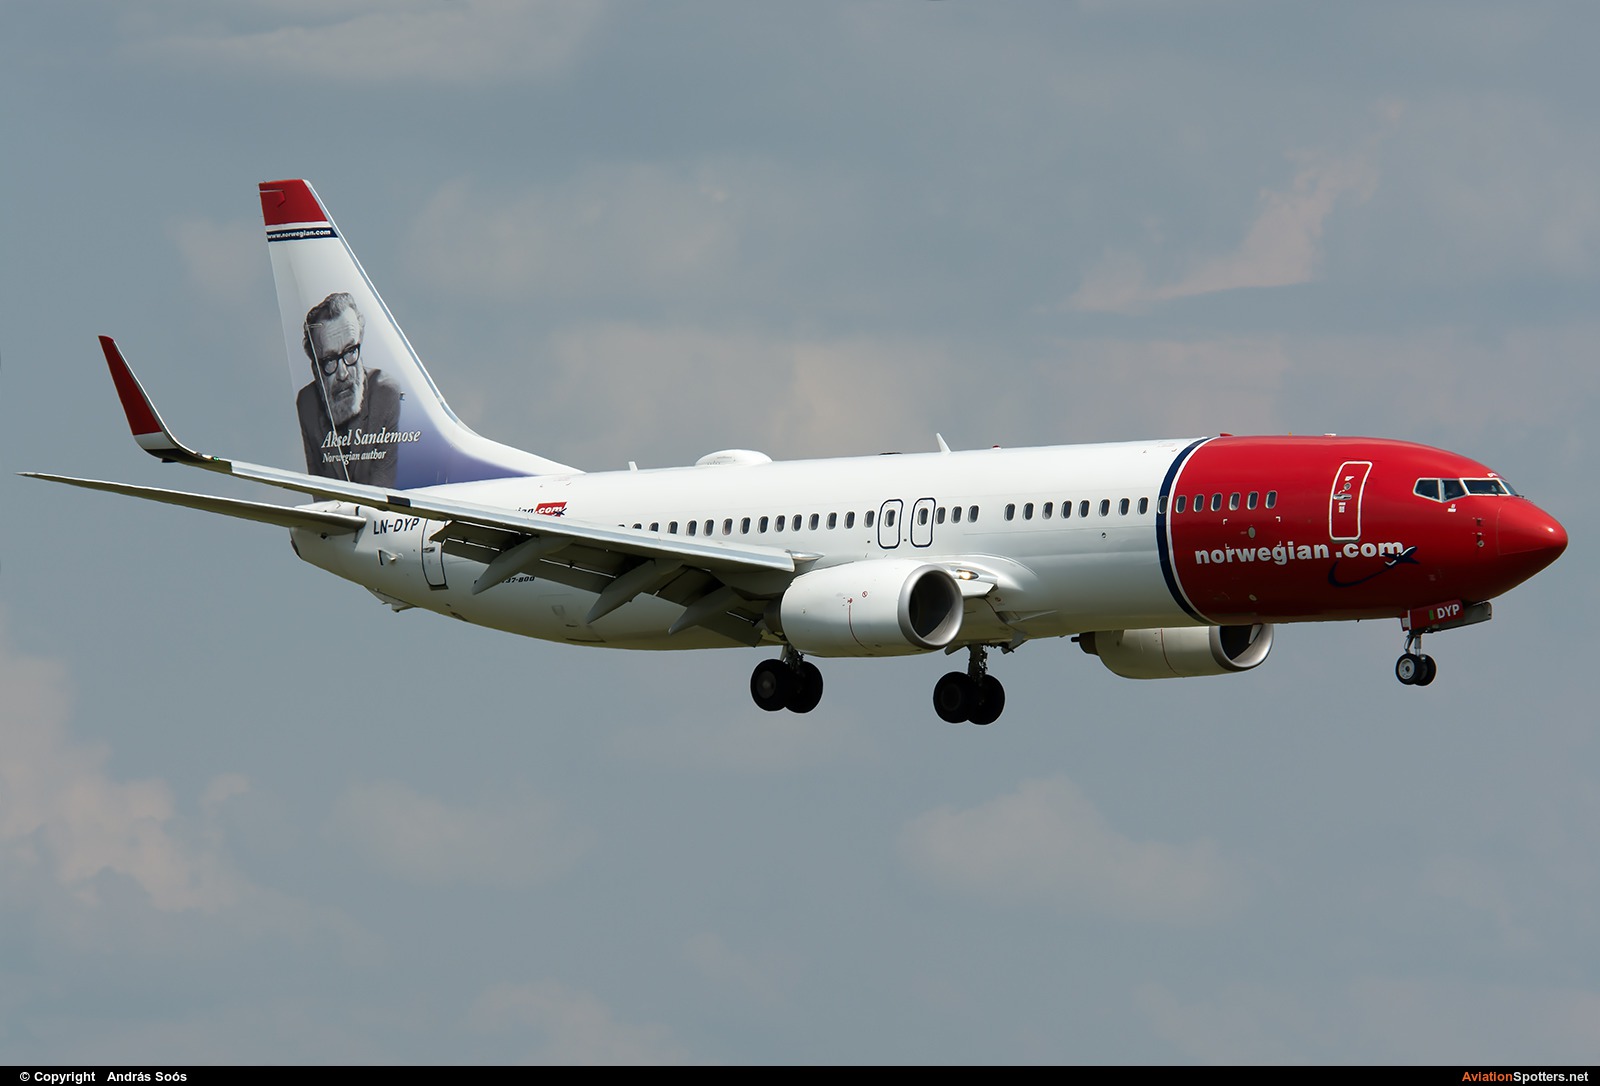 Norwegian Air Shuttle  -  737-800  (LN-DYP) By András Soós (sas1965)